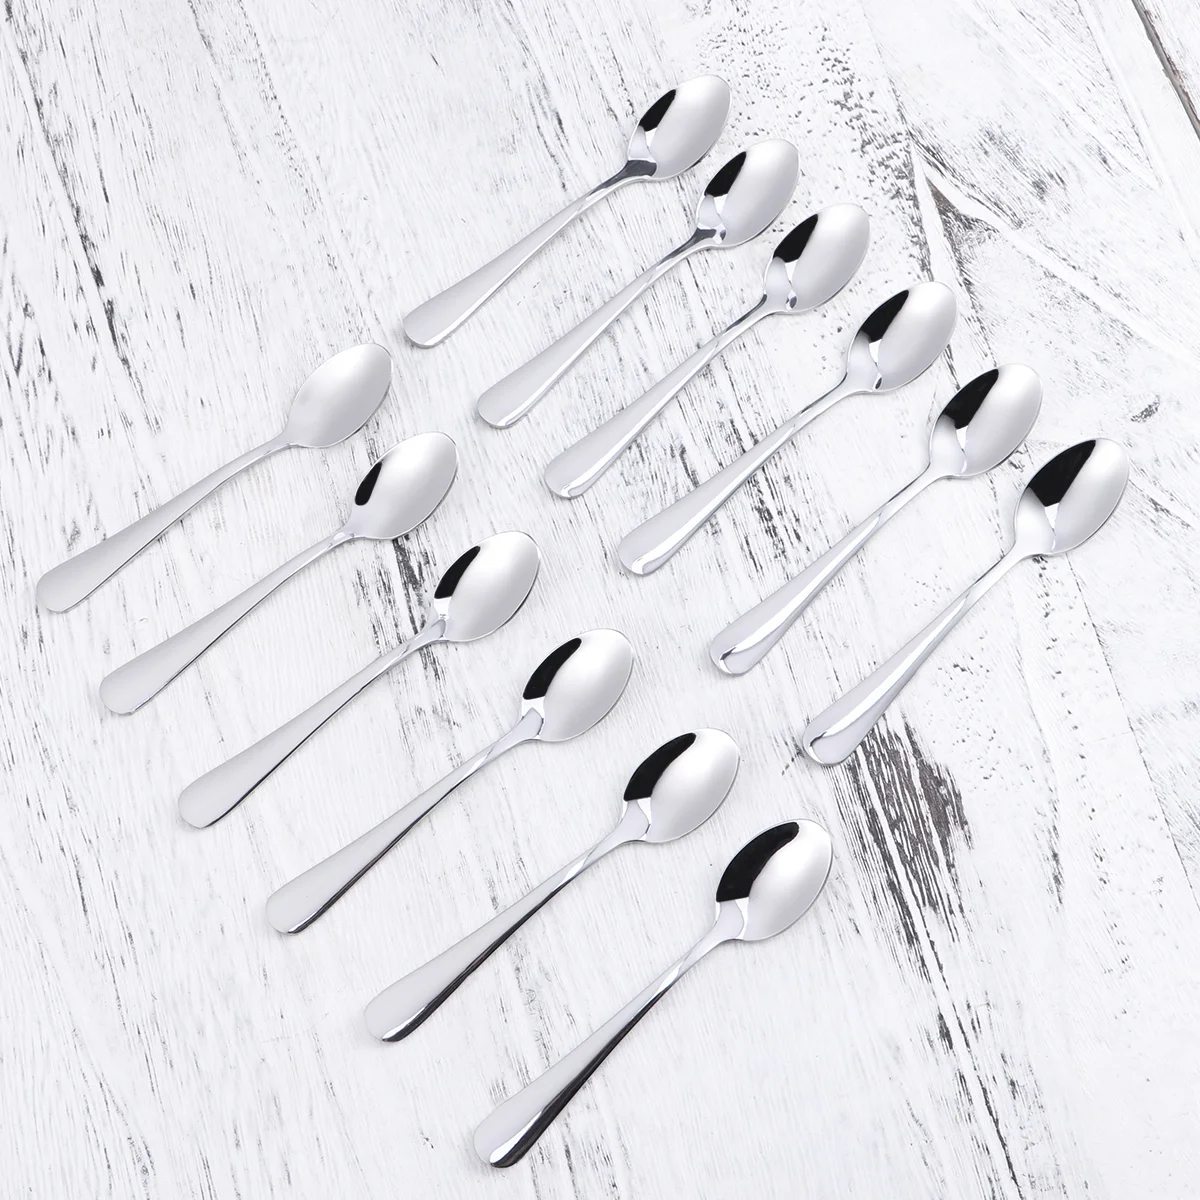 

12 Pcs Stainless Steel Spoon Kitchen Cutlery Set Metal Serving Spoons Sugar Spoon Coffee Stir Spoons Table Teaspoons Concentrate